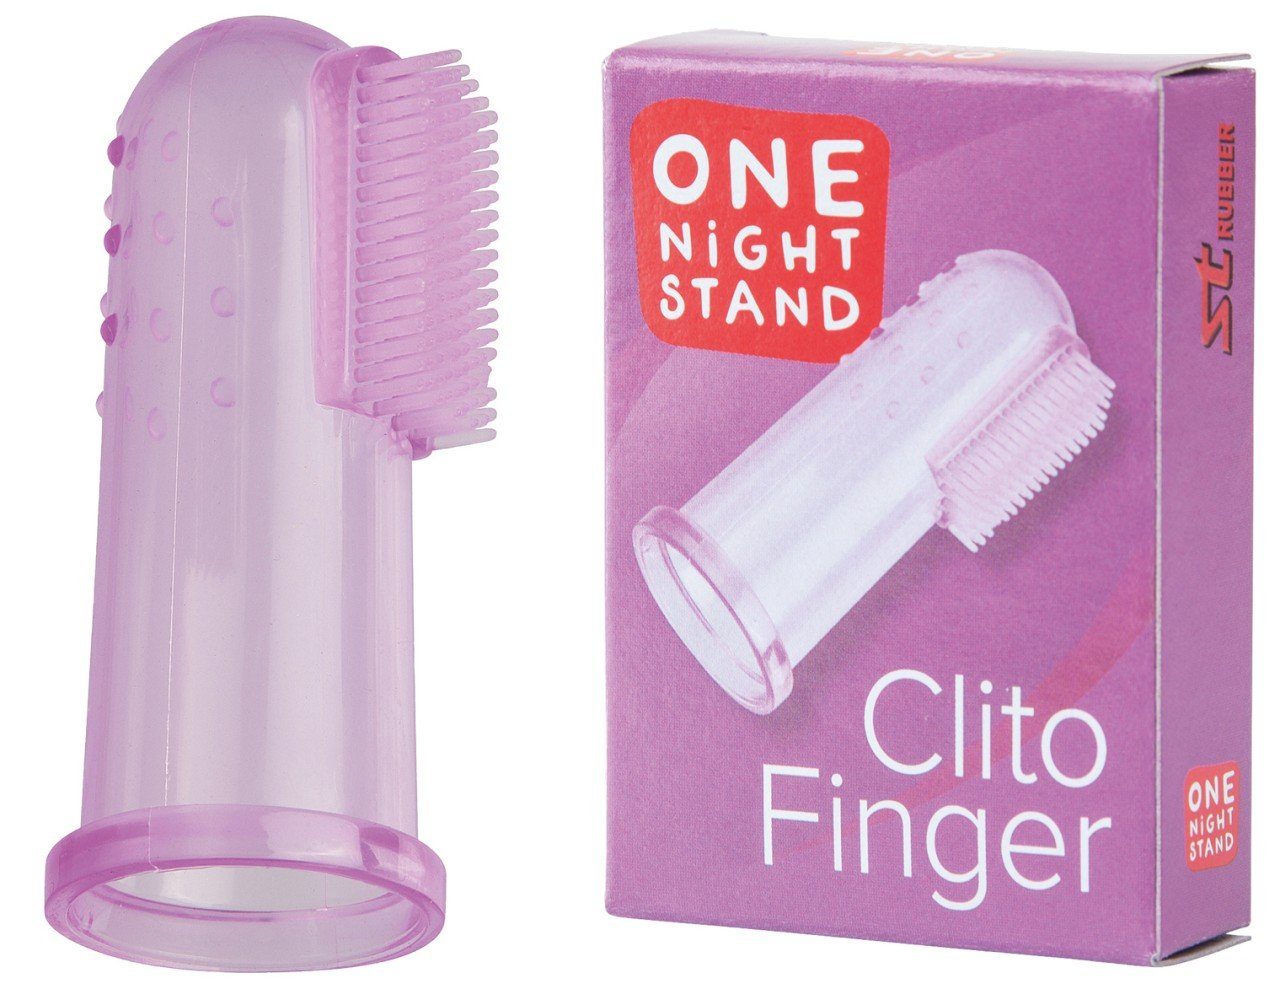 Mini-Vibrator STAND ONE ONE Clito-Finger STAND NIGHT NIGHT